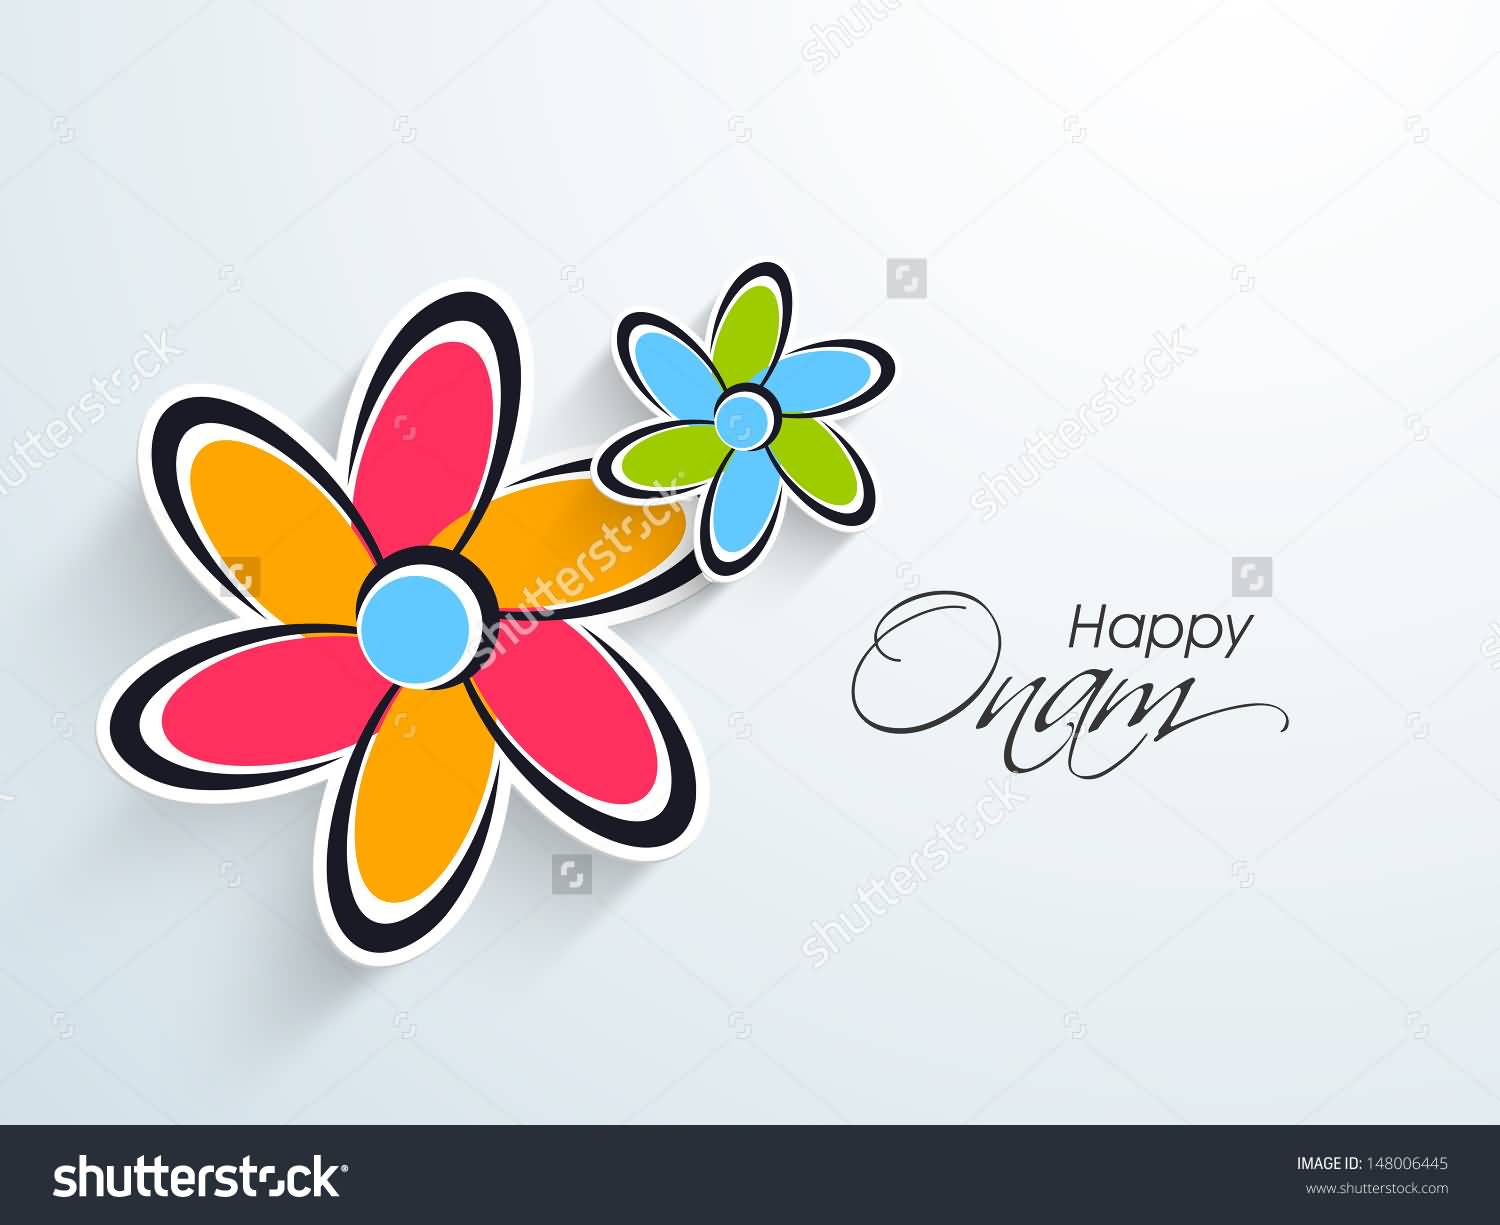 Happy Onam Beautiful Wallpaper Image